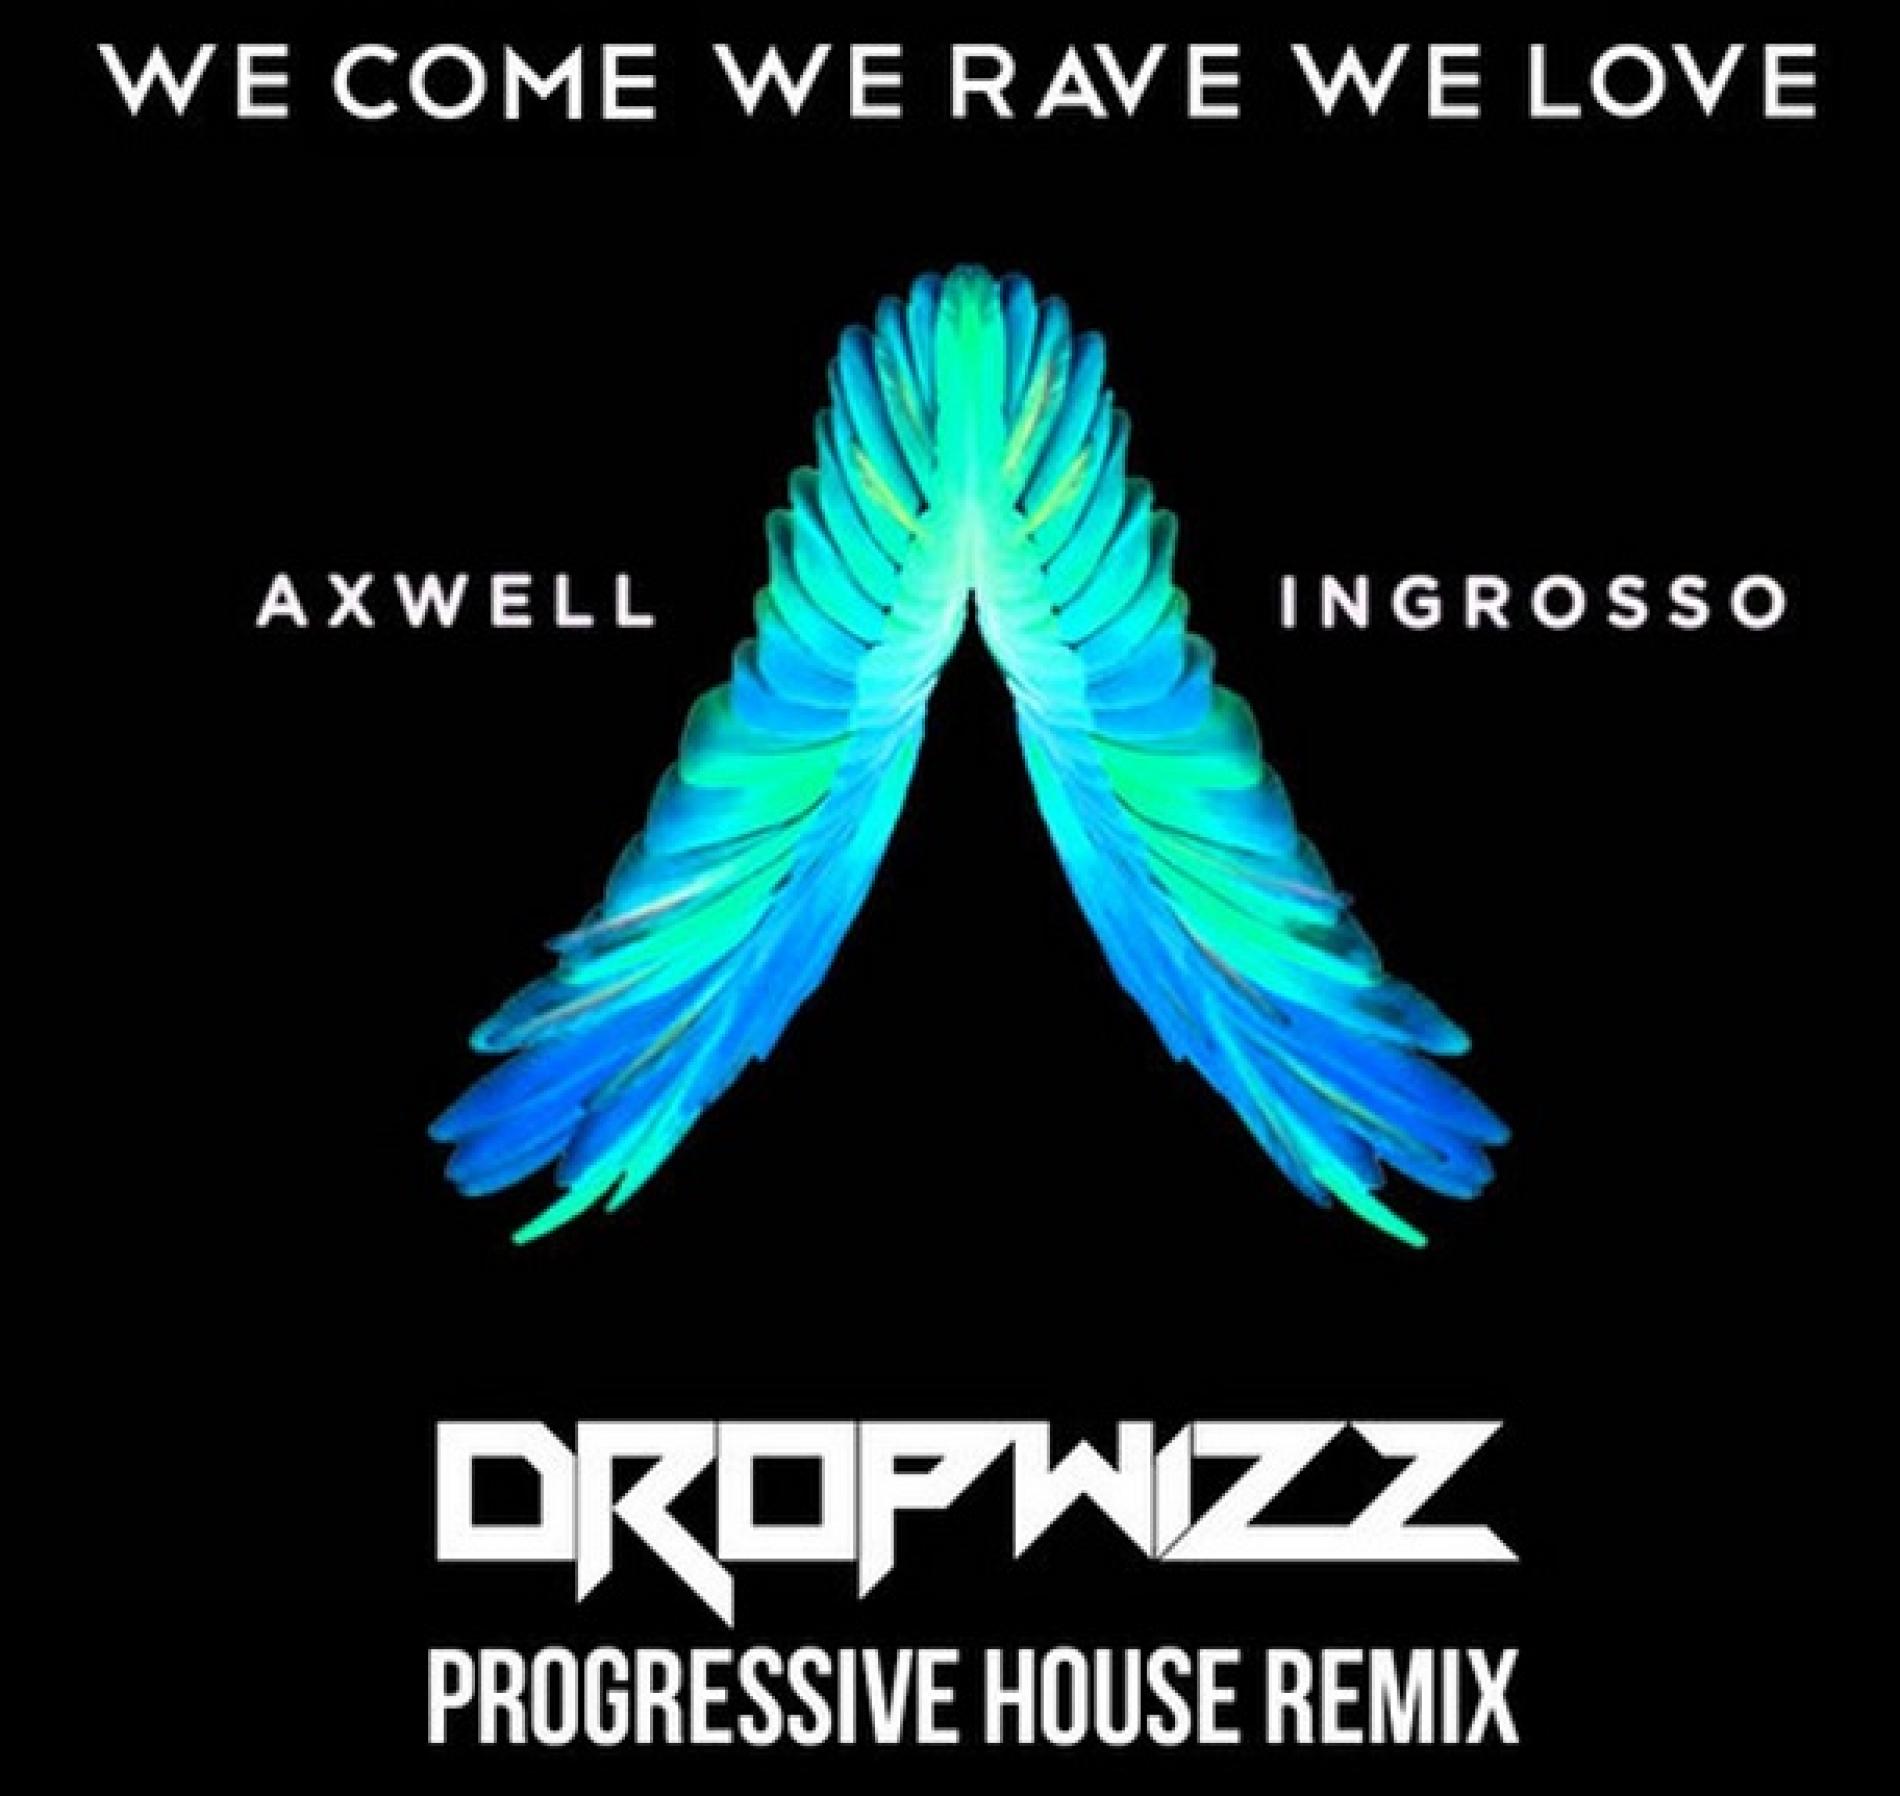 Dropwizz – Axwell & @Ingrosso – We Come, We Rave, We Love (Progressive Remix)